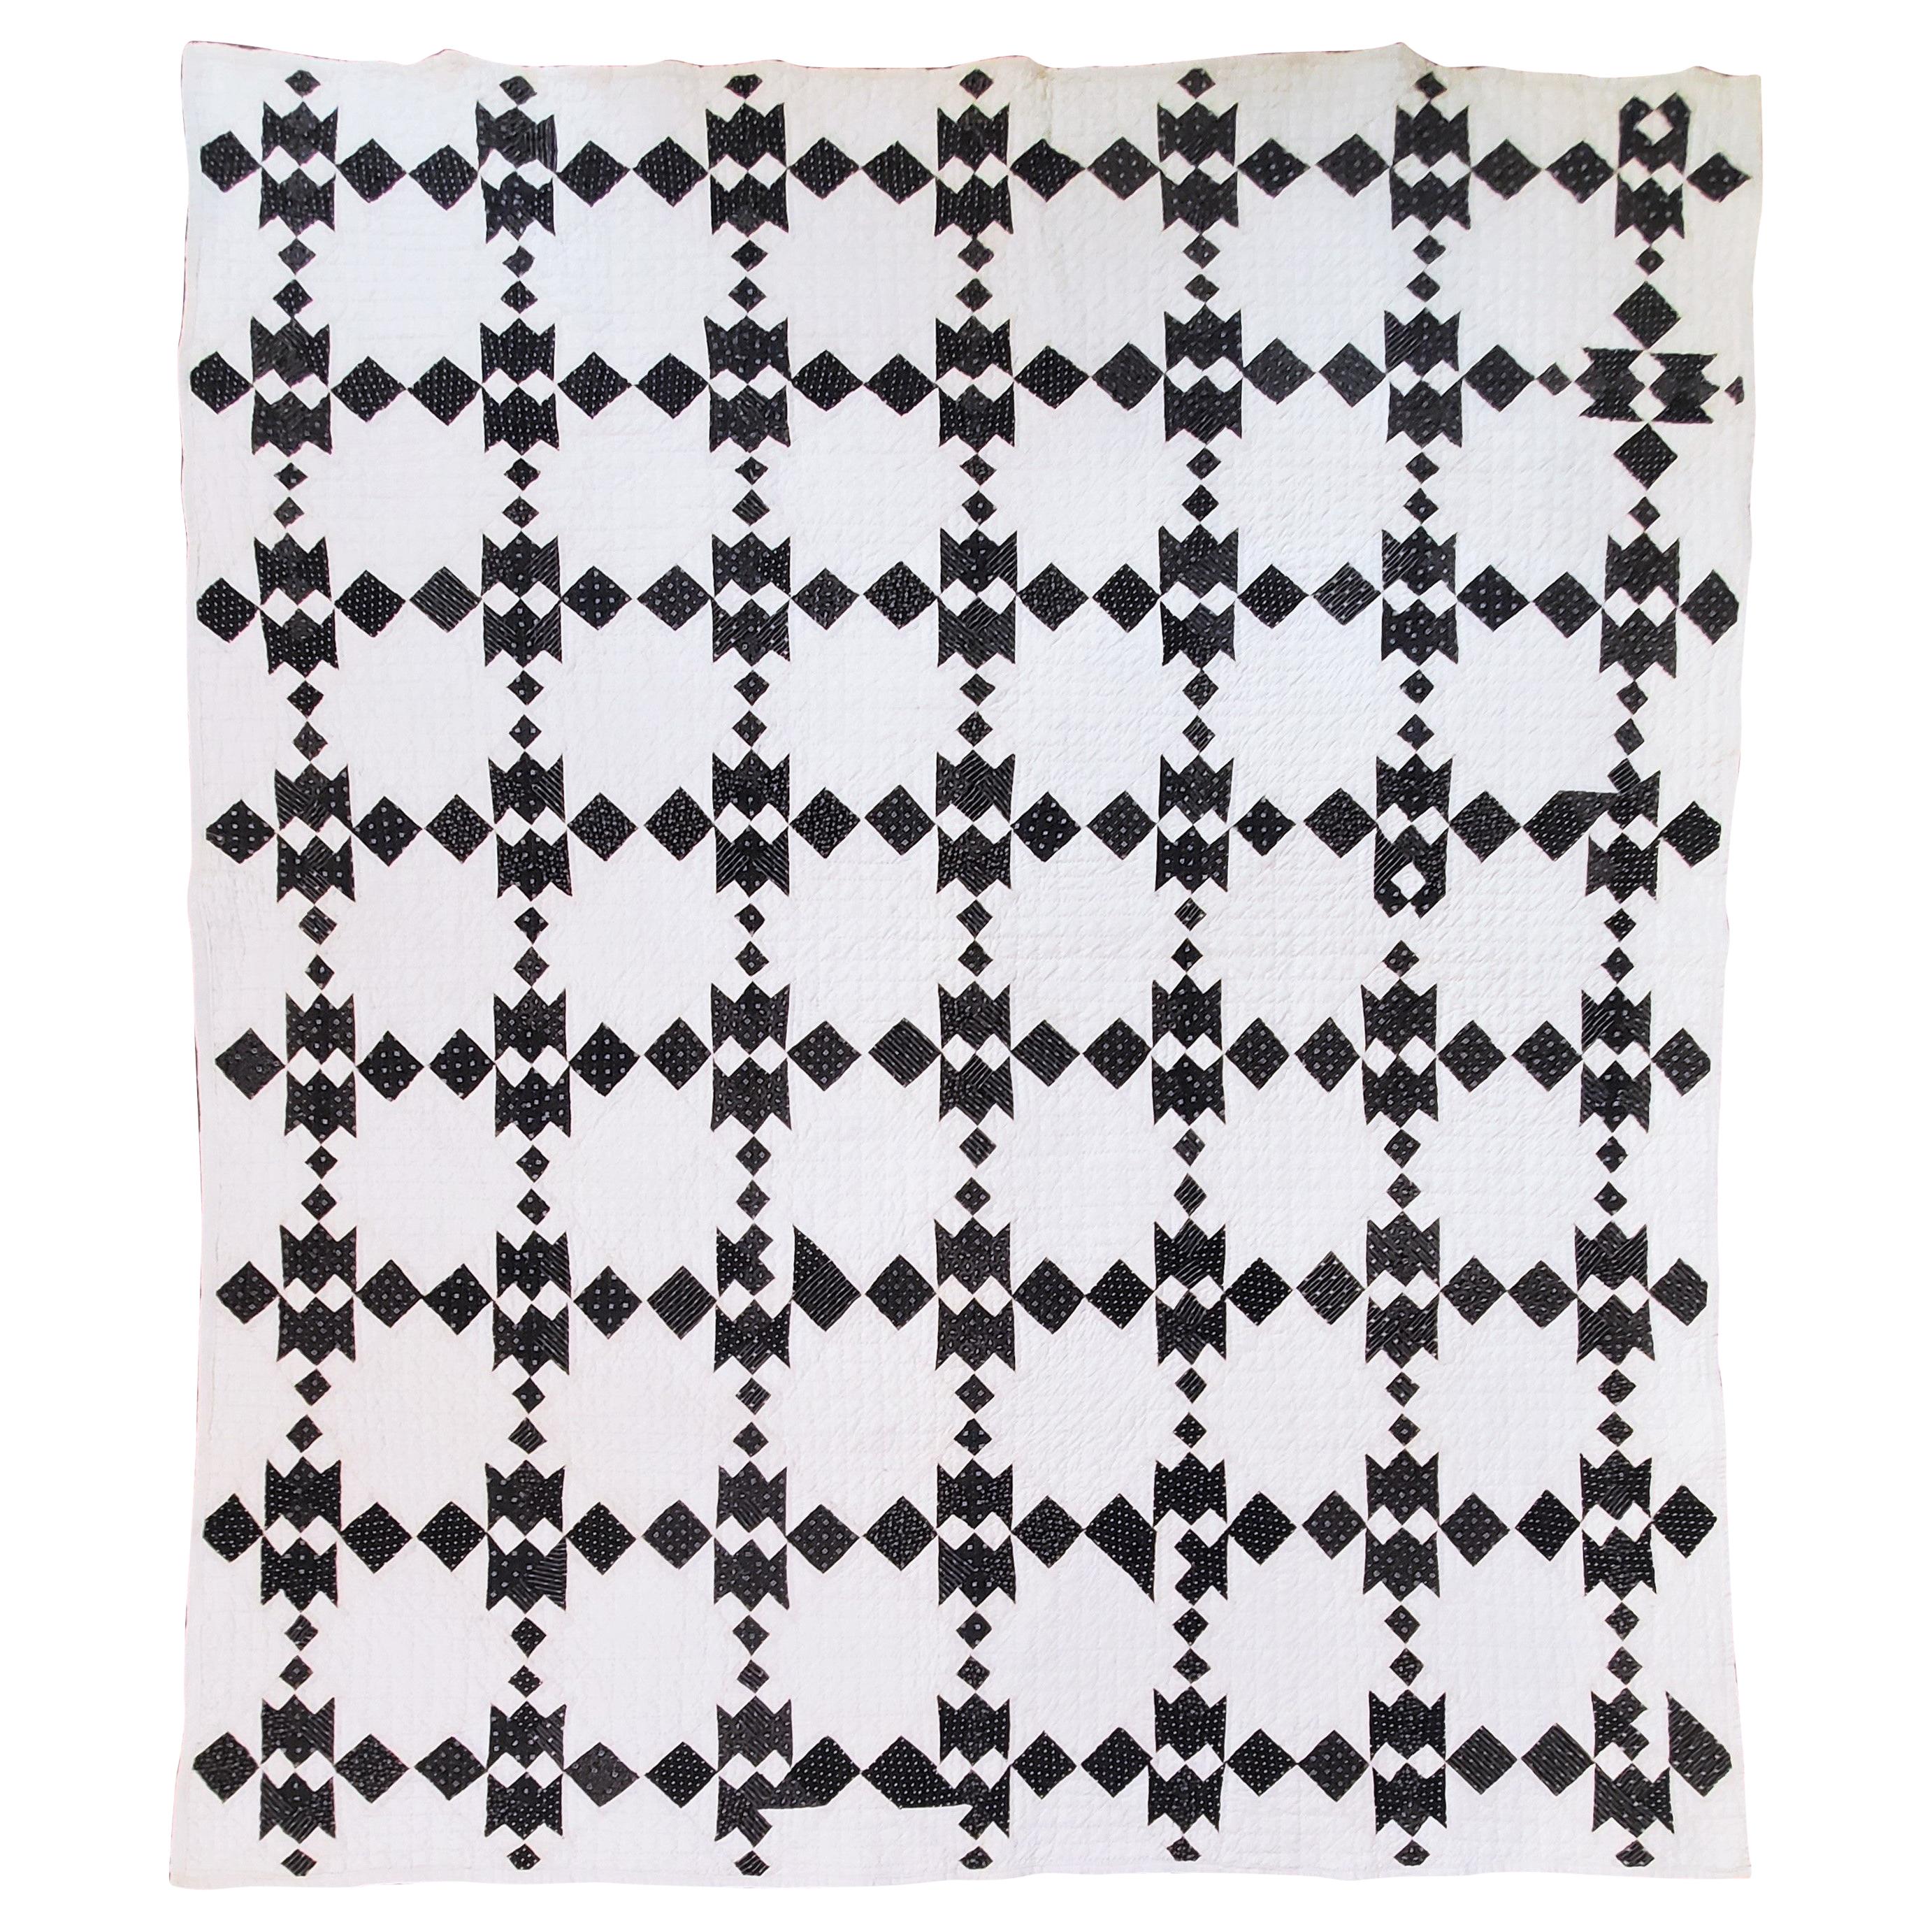 19th Century Black and White Geometric Quilt